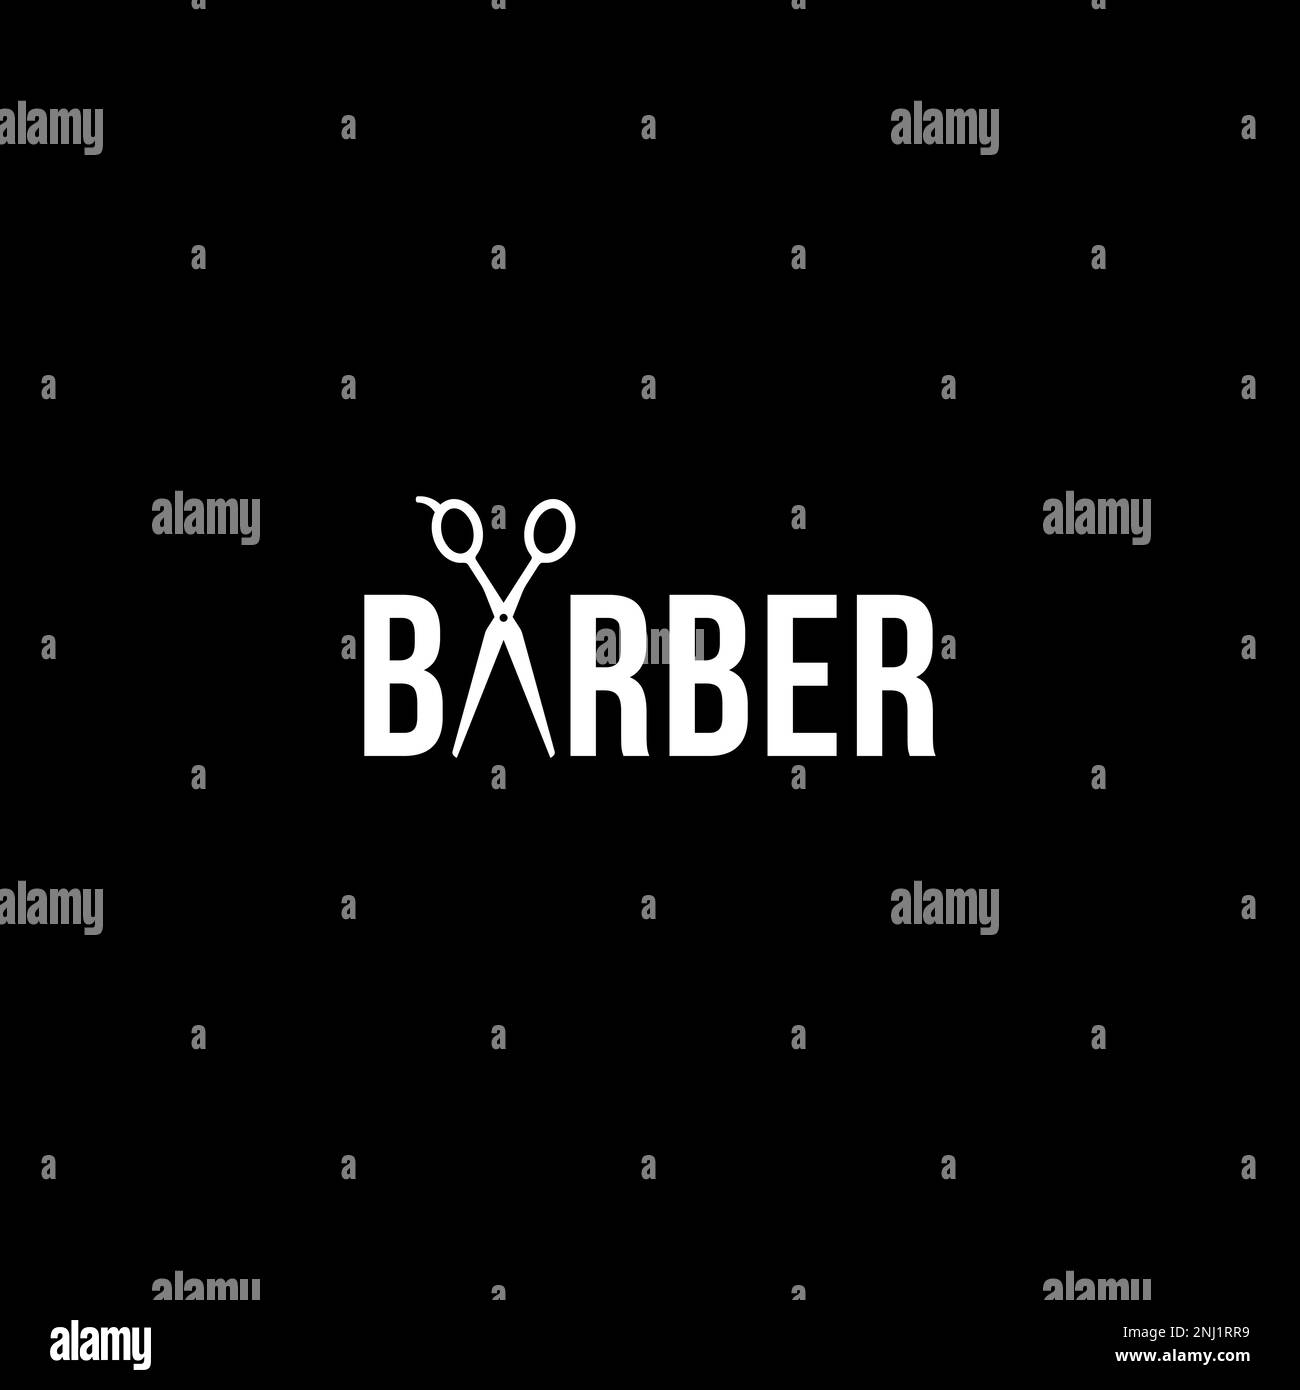 Barber logo or wordmark design Stock Vector